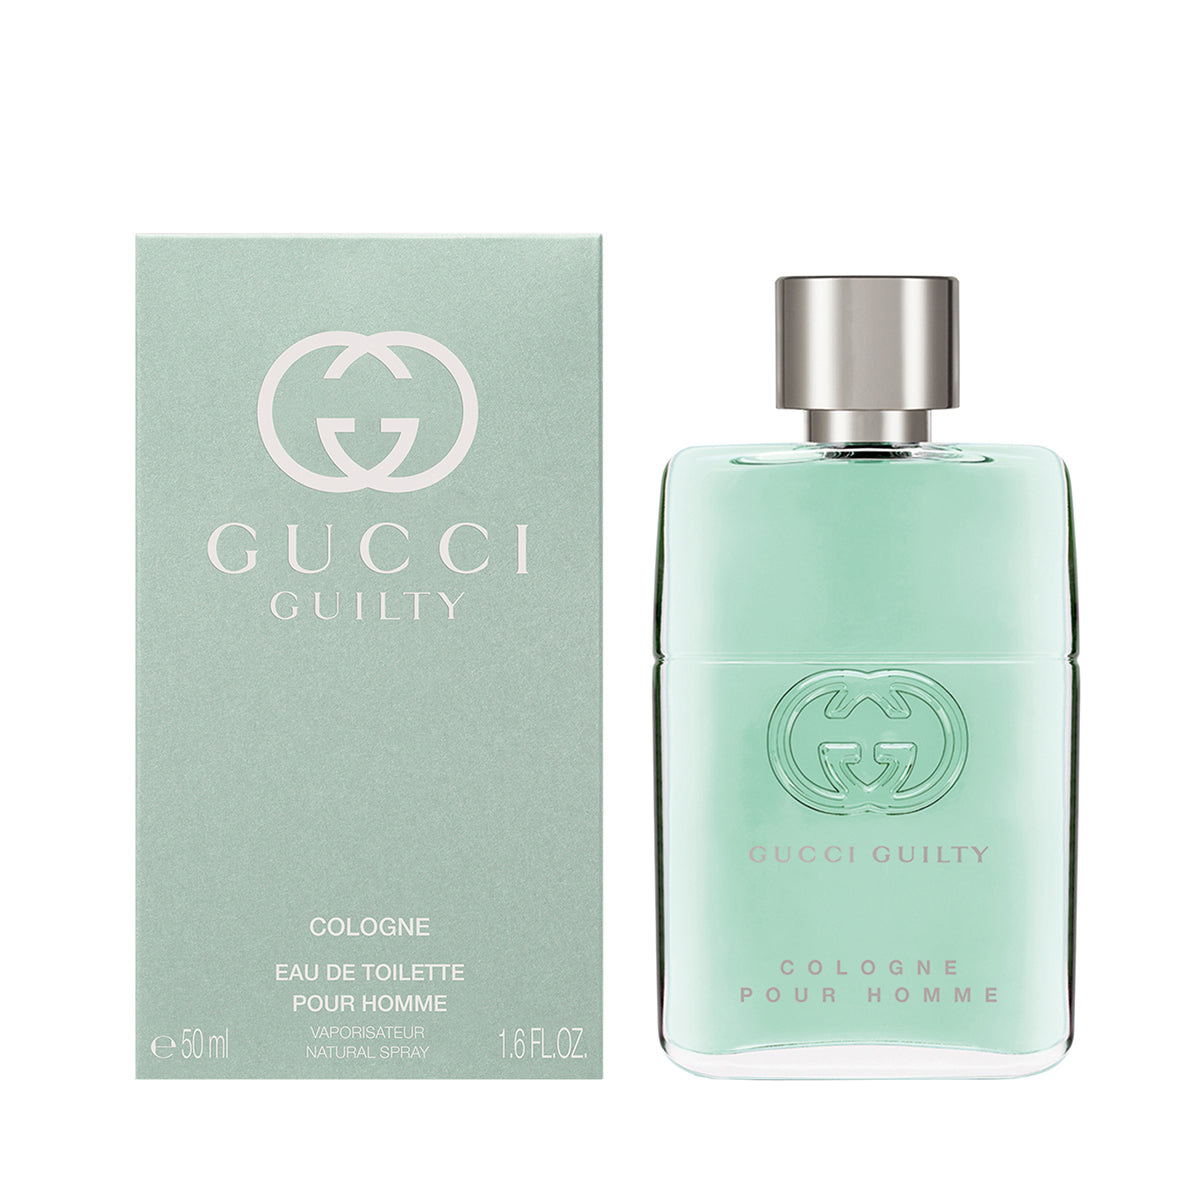 Aquatic Natural Spray Gucci Guilty Cologne perfum for Him pari gallery qatar